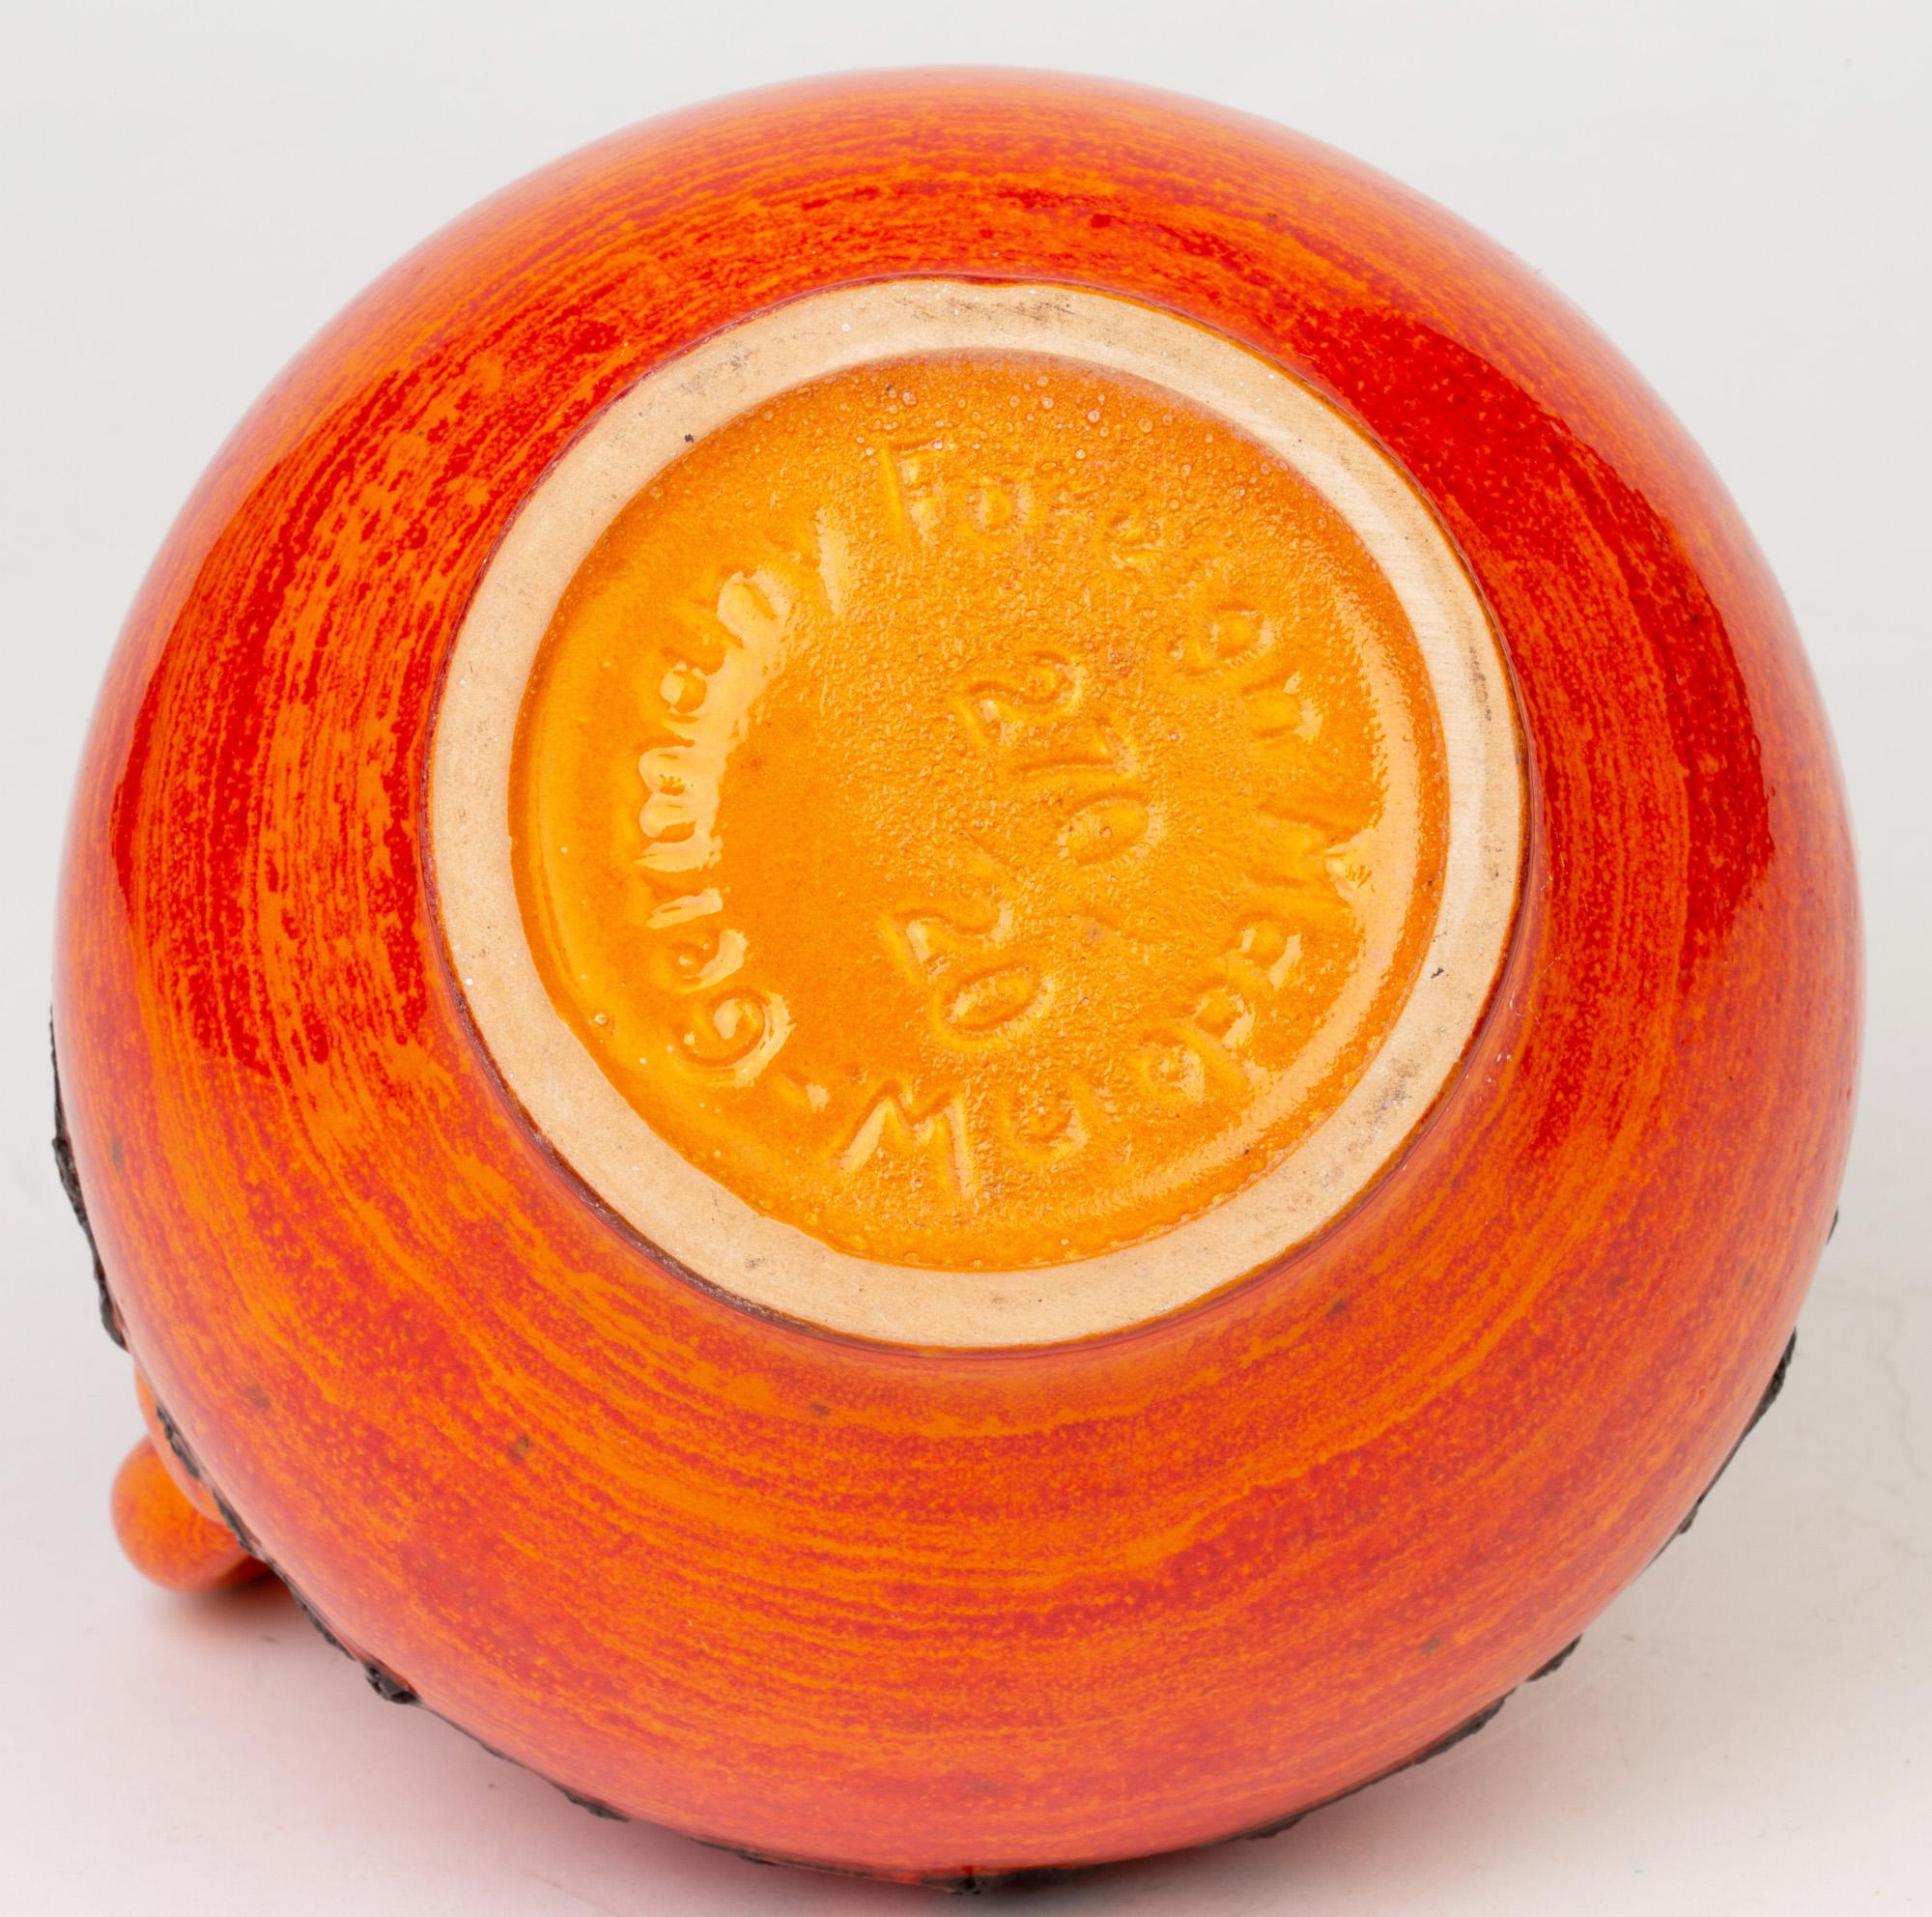 Kreutz Keramik German Midcentury Orange and Red Fat Lava Handled Vase For Sale 1